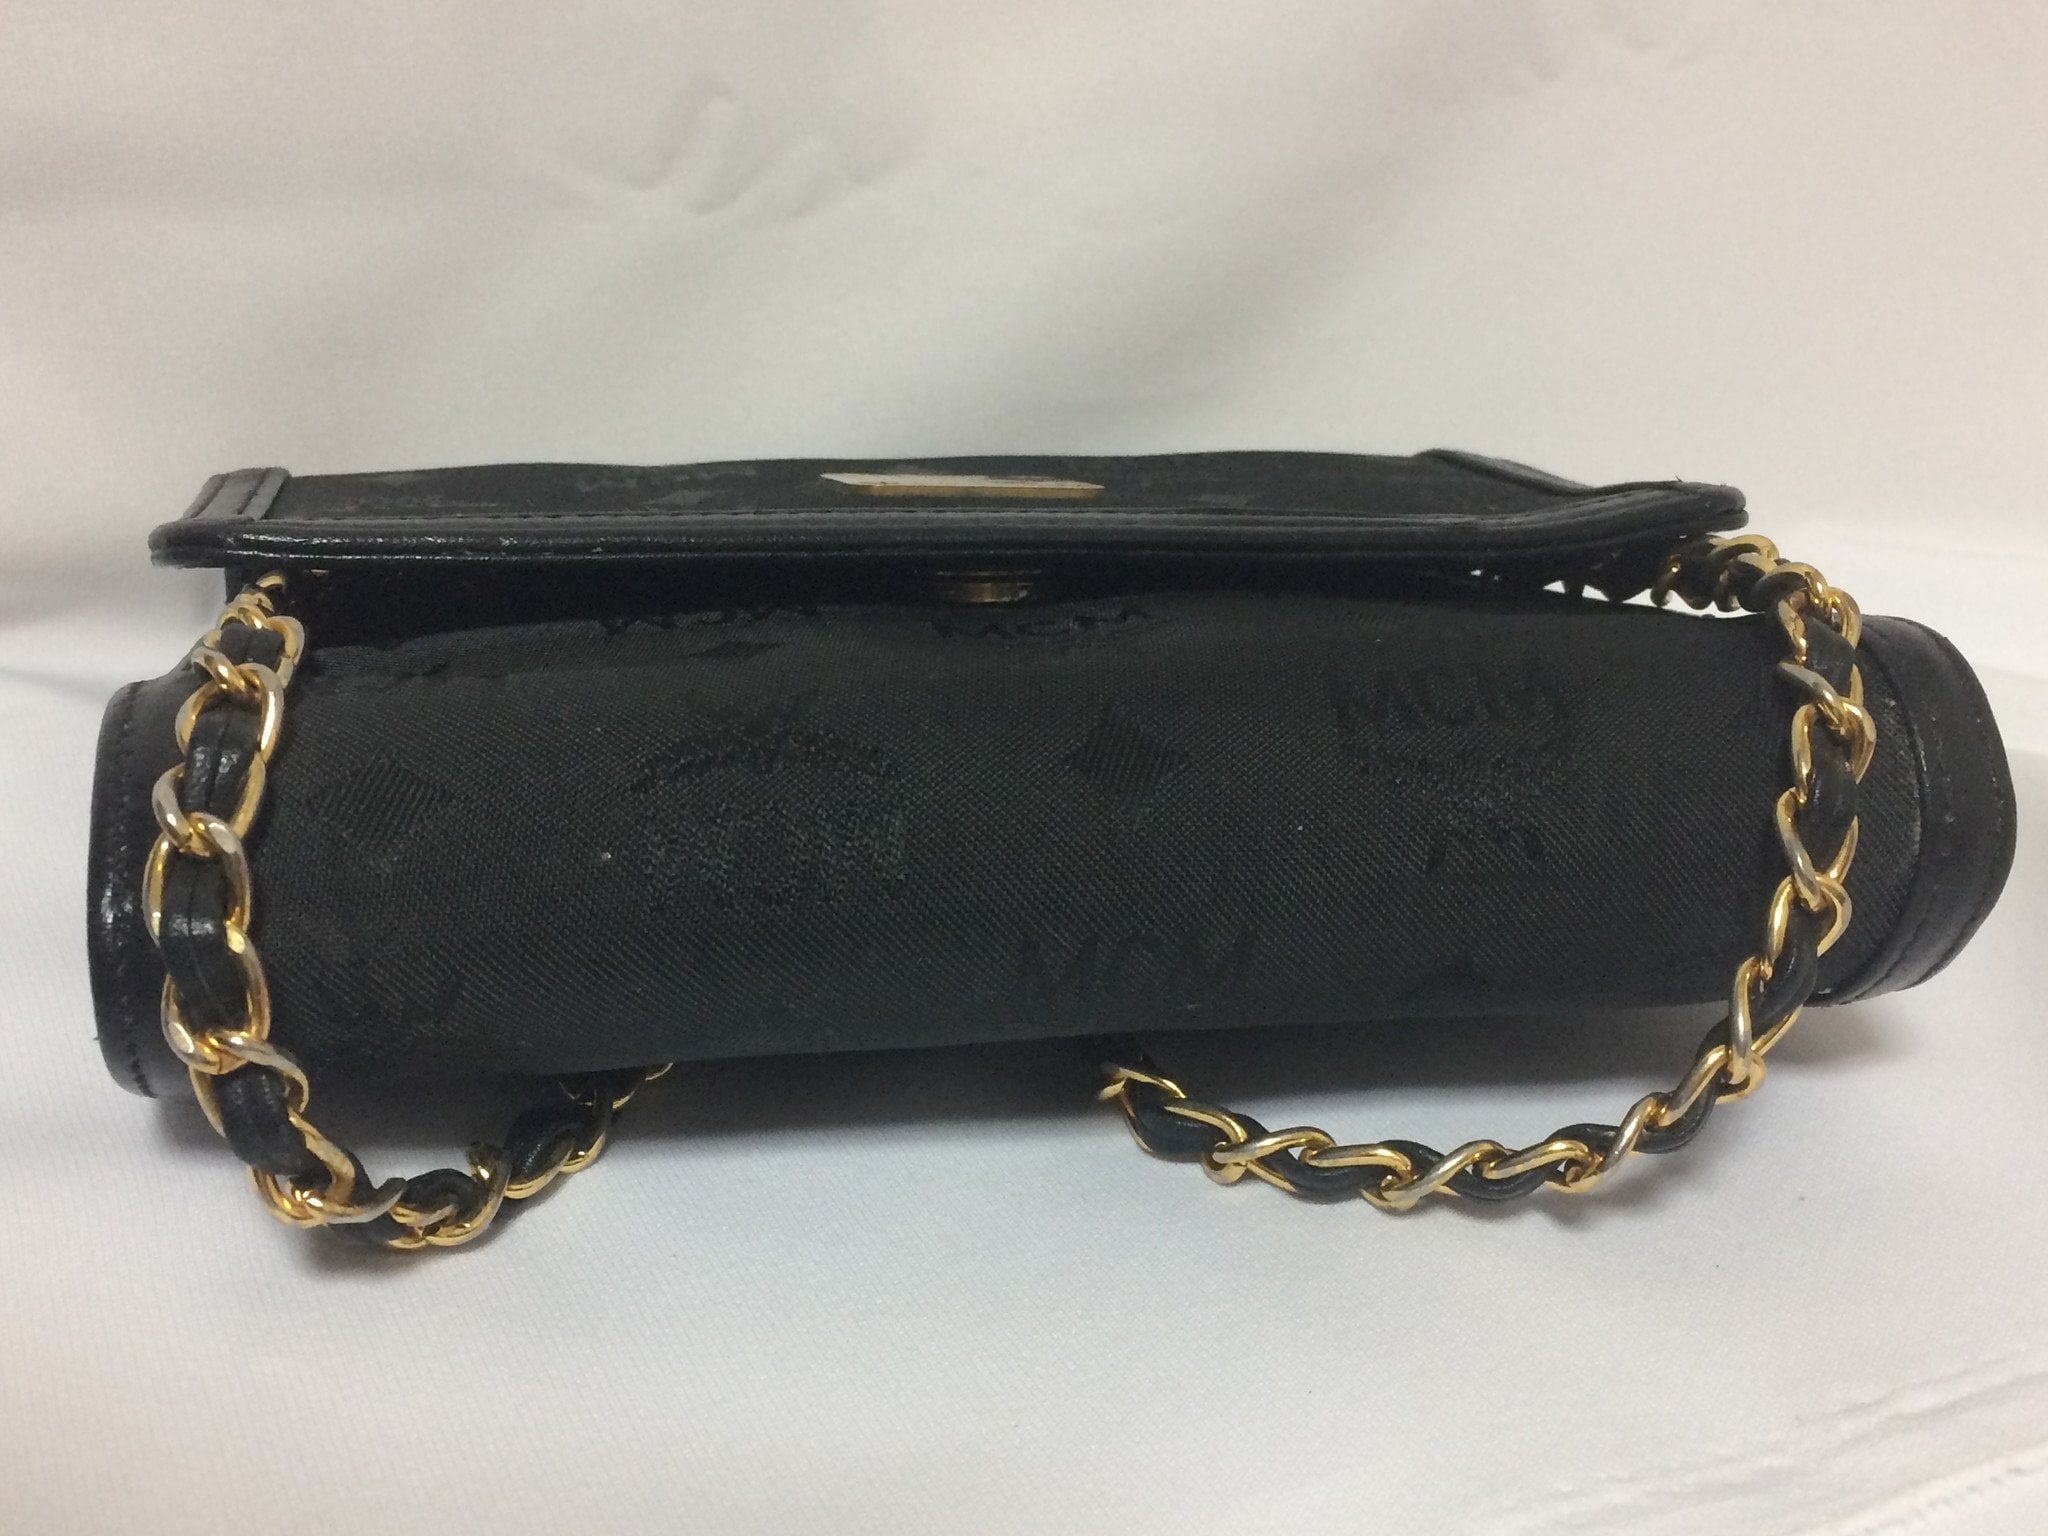 New MCM Black Leather Pouch Clutch Bag Wallet NEW Rare Original Authentic